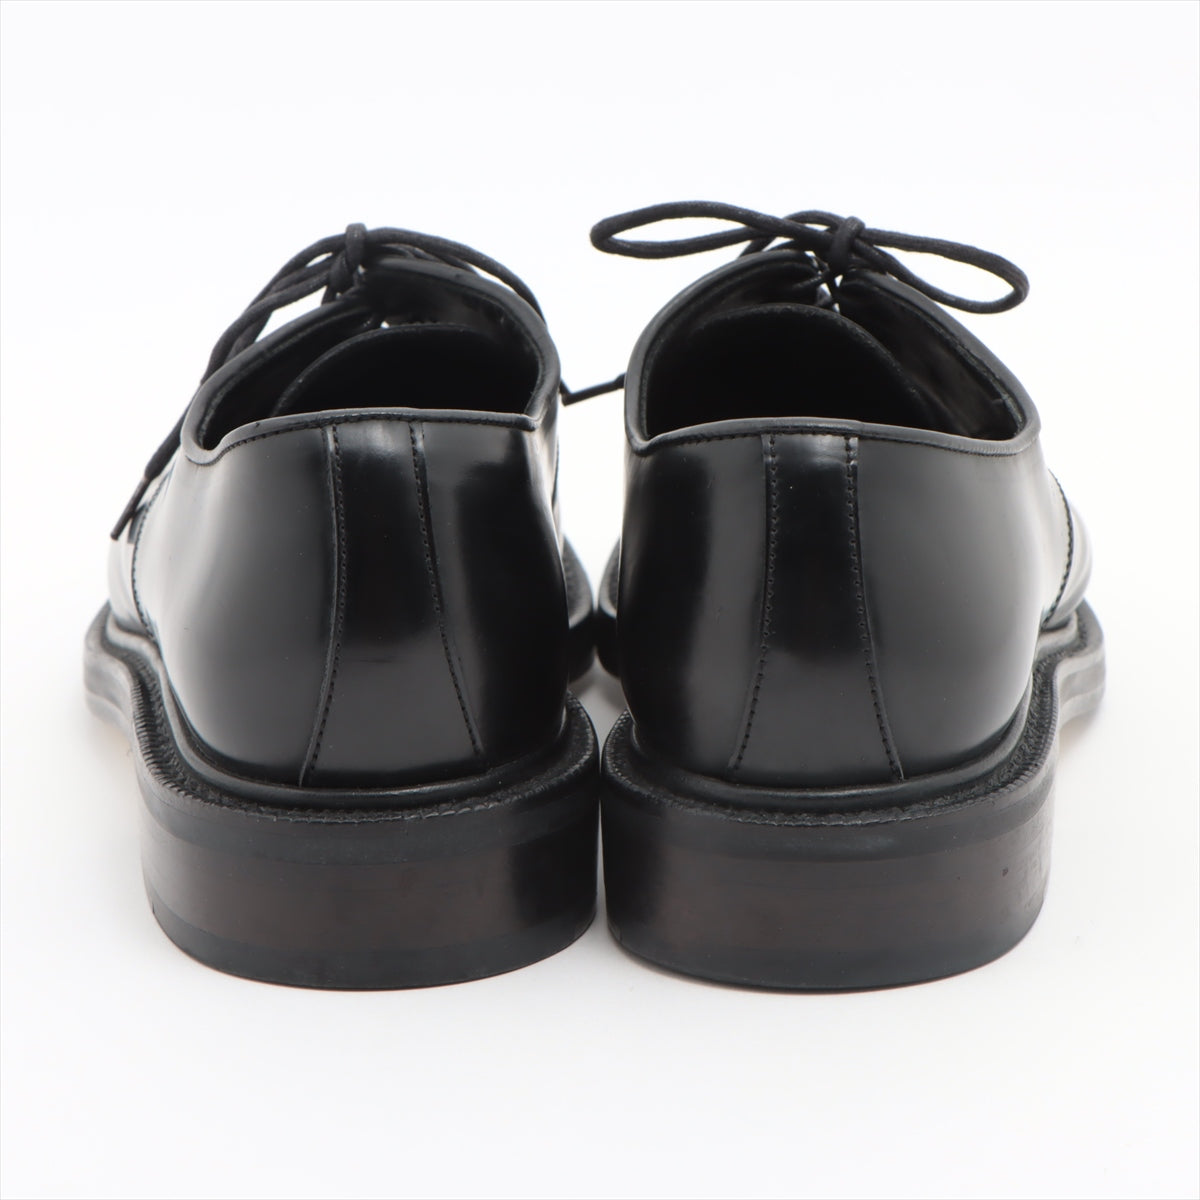 Loewe Leather Leather shoes 37 Ladies' Black